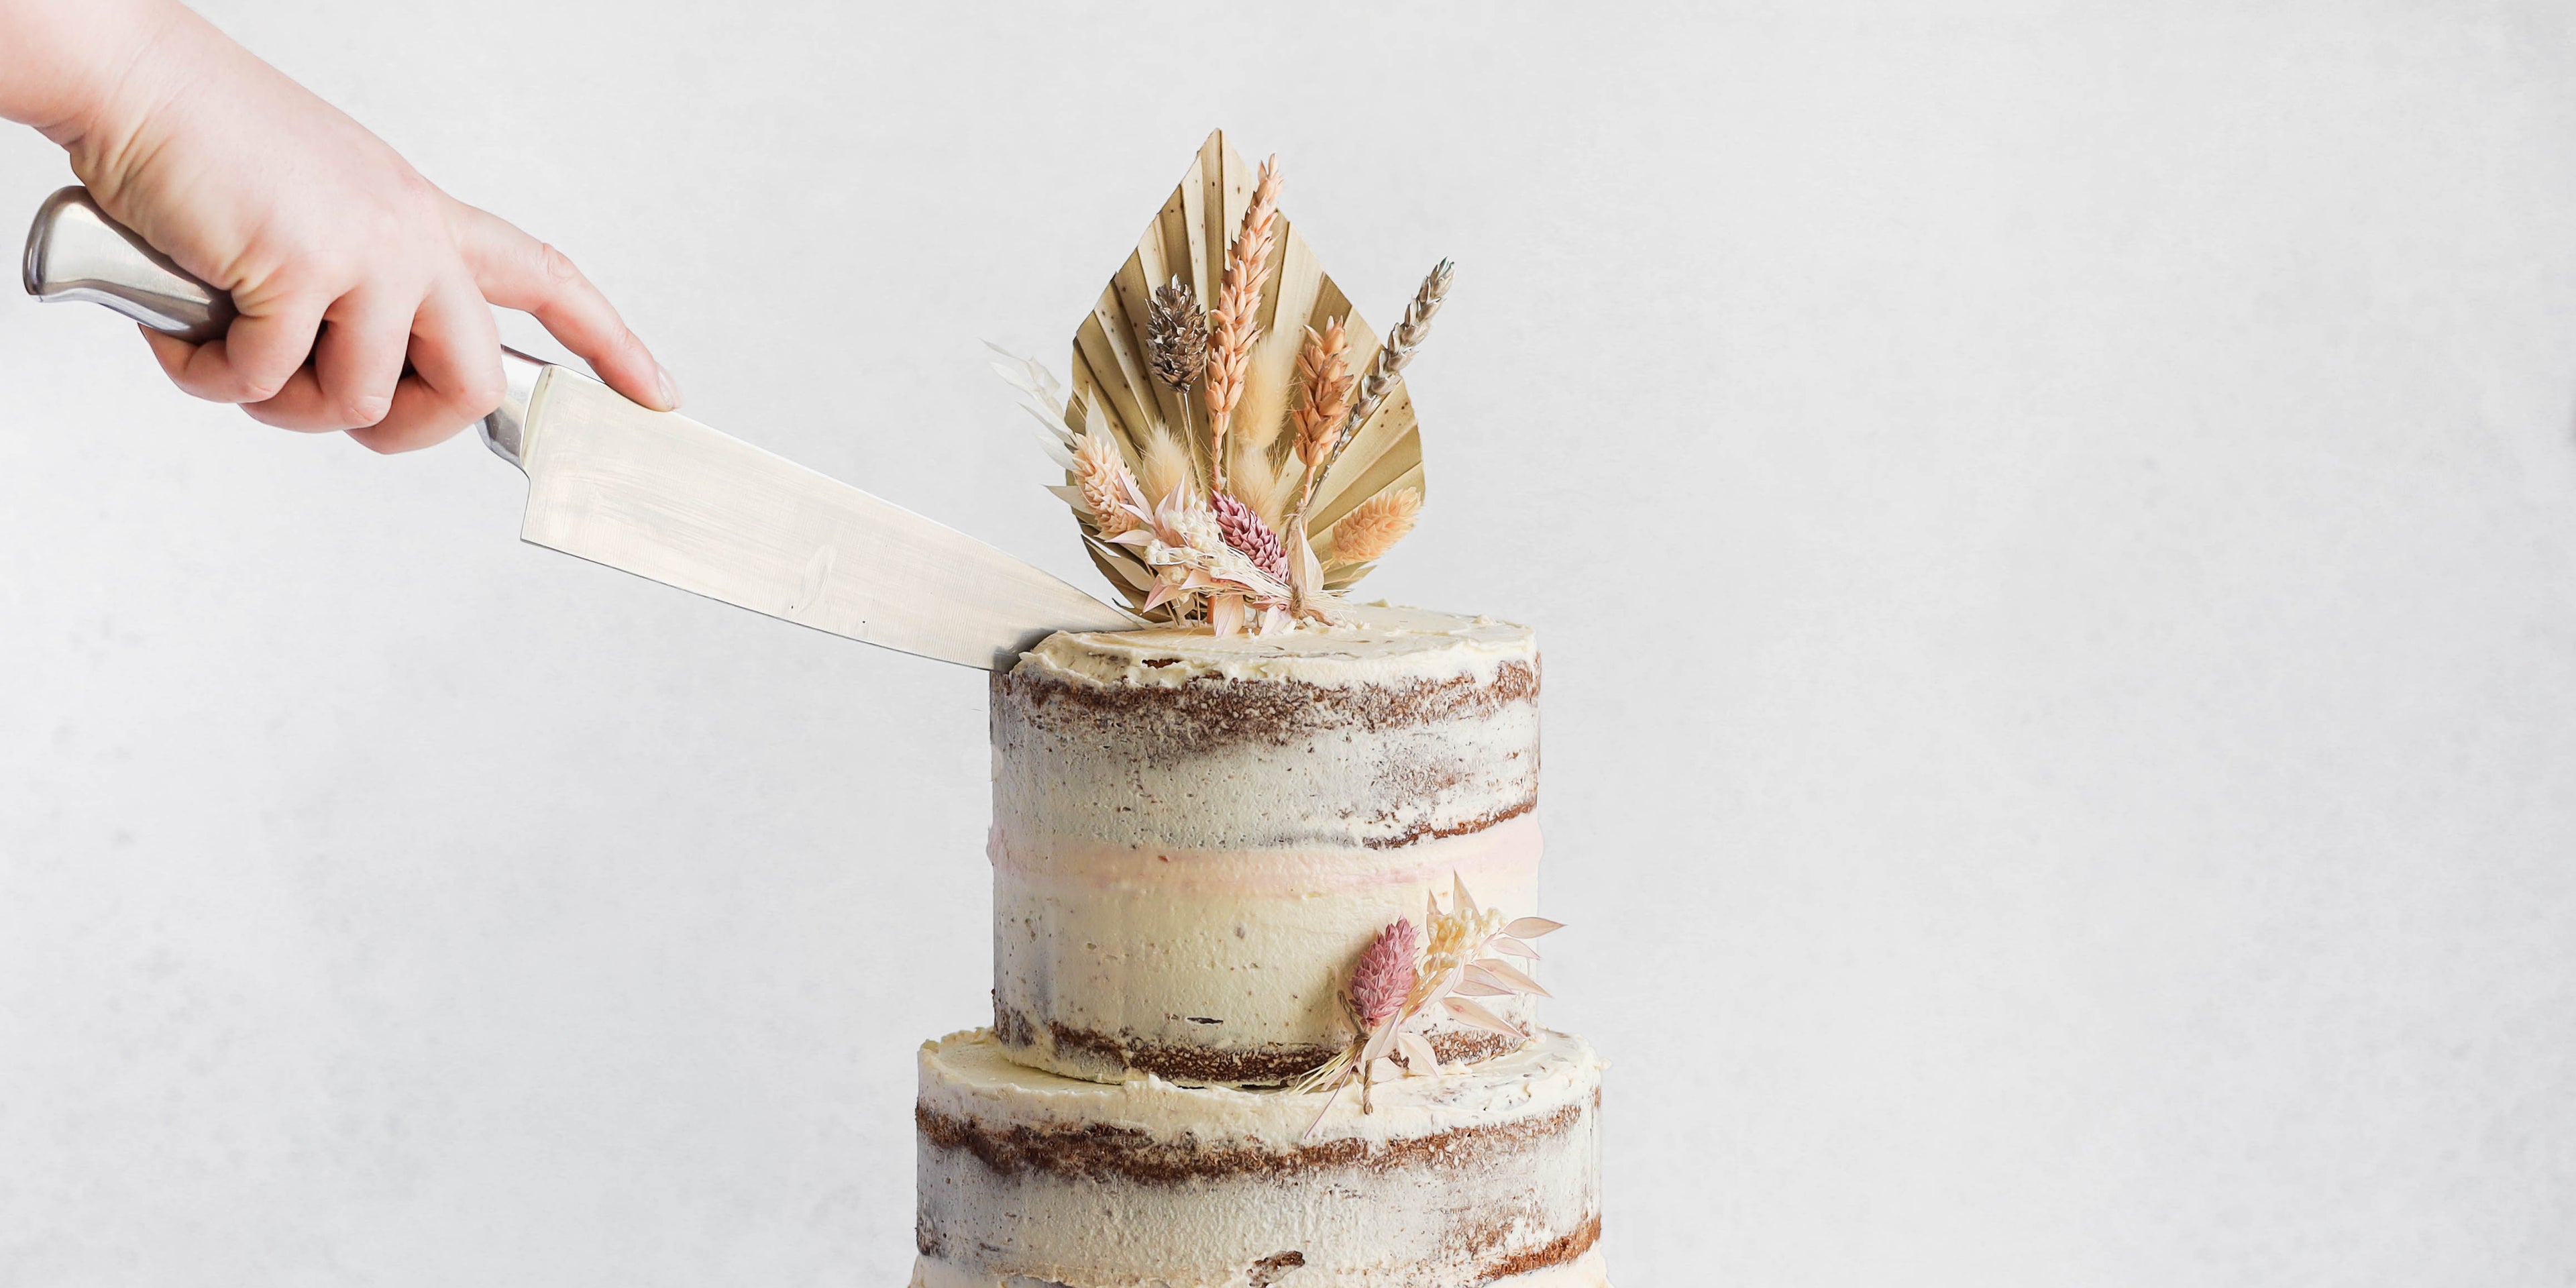 Side view of a knife slicing into a naked vanilla celebration cake